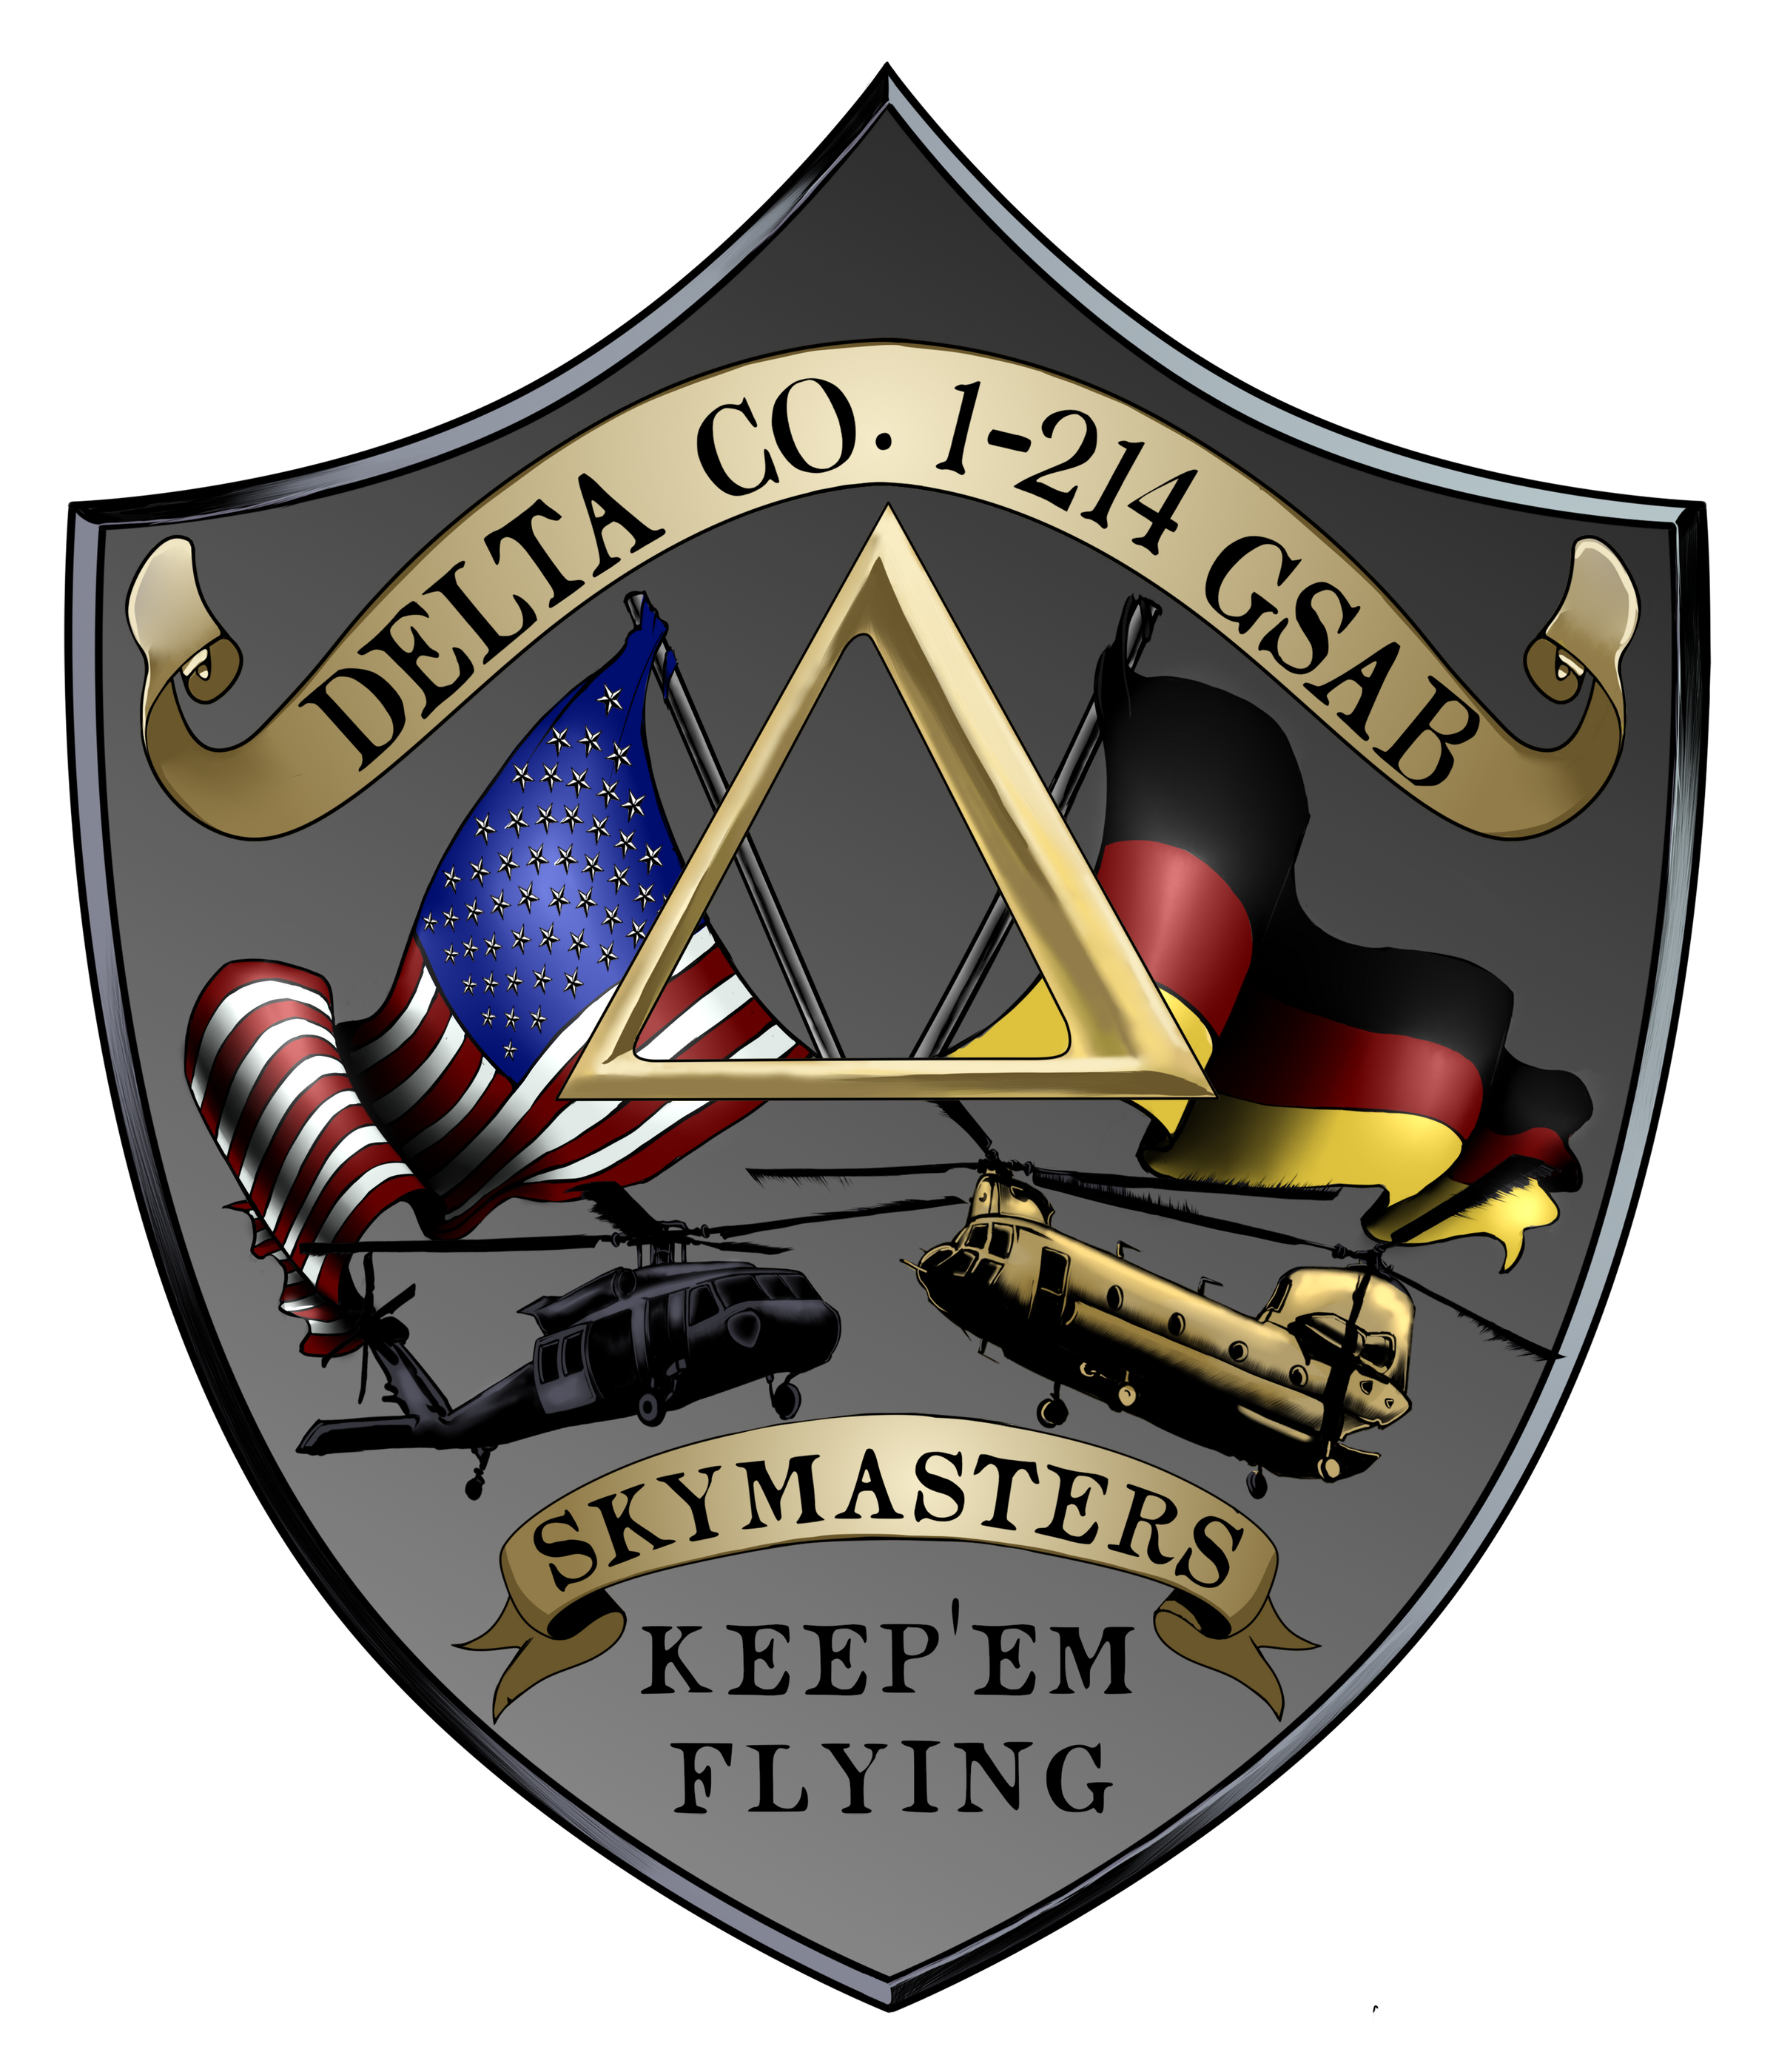 D Co, 1-214 GSAB "Skymasters"